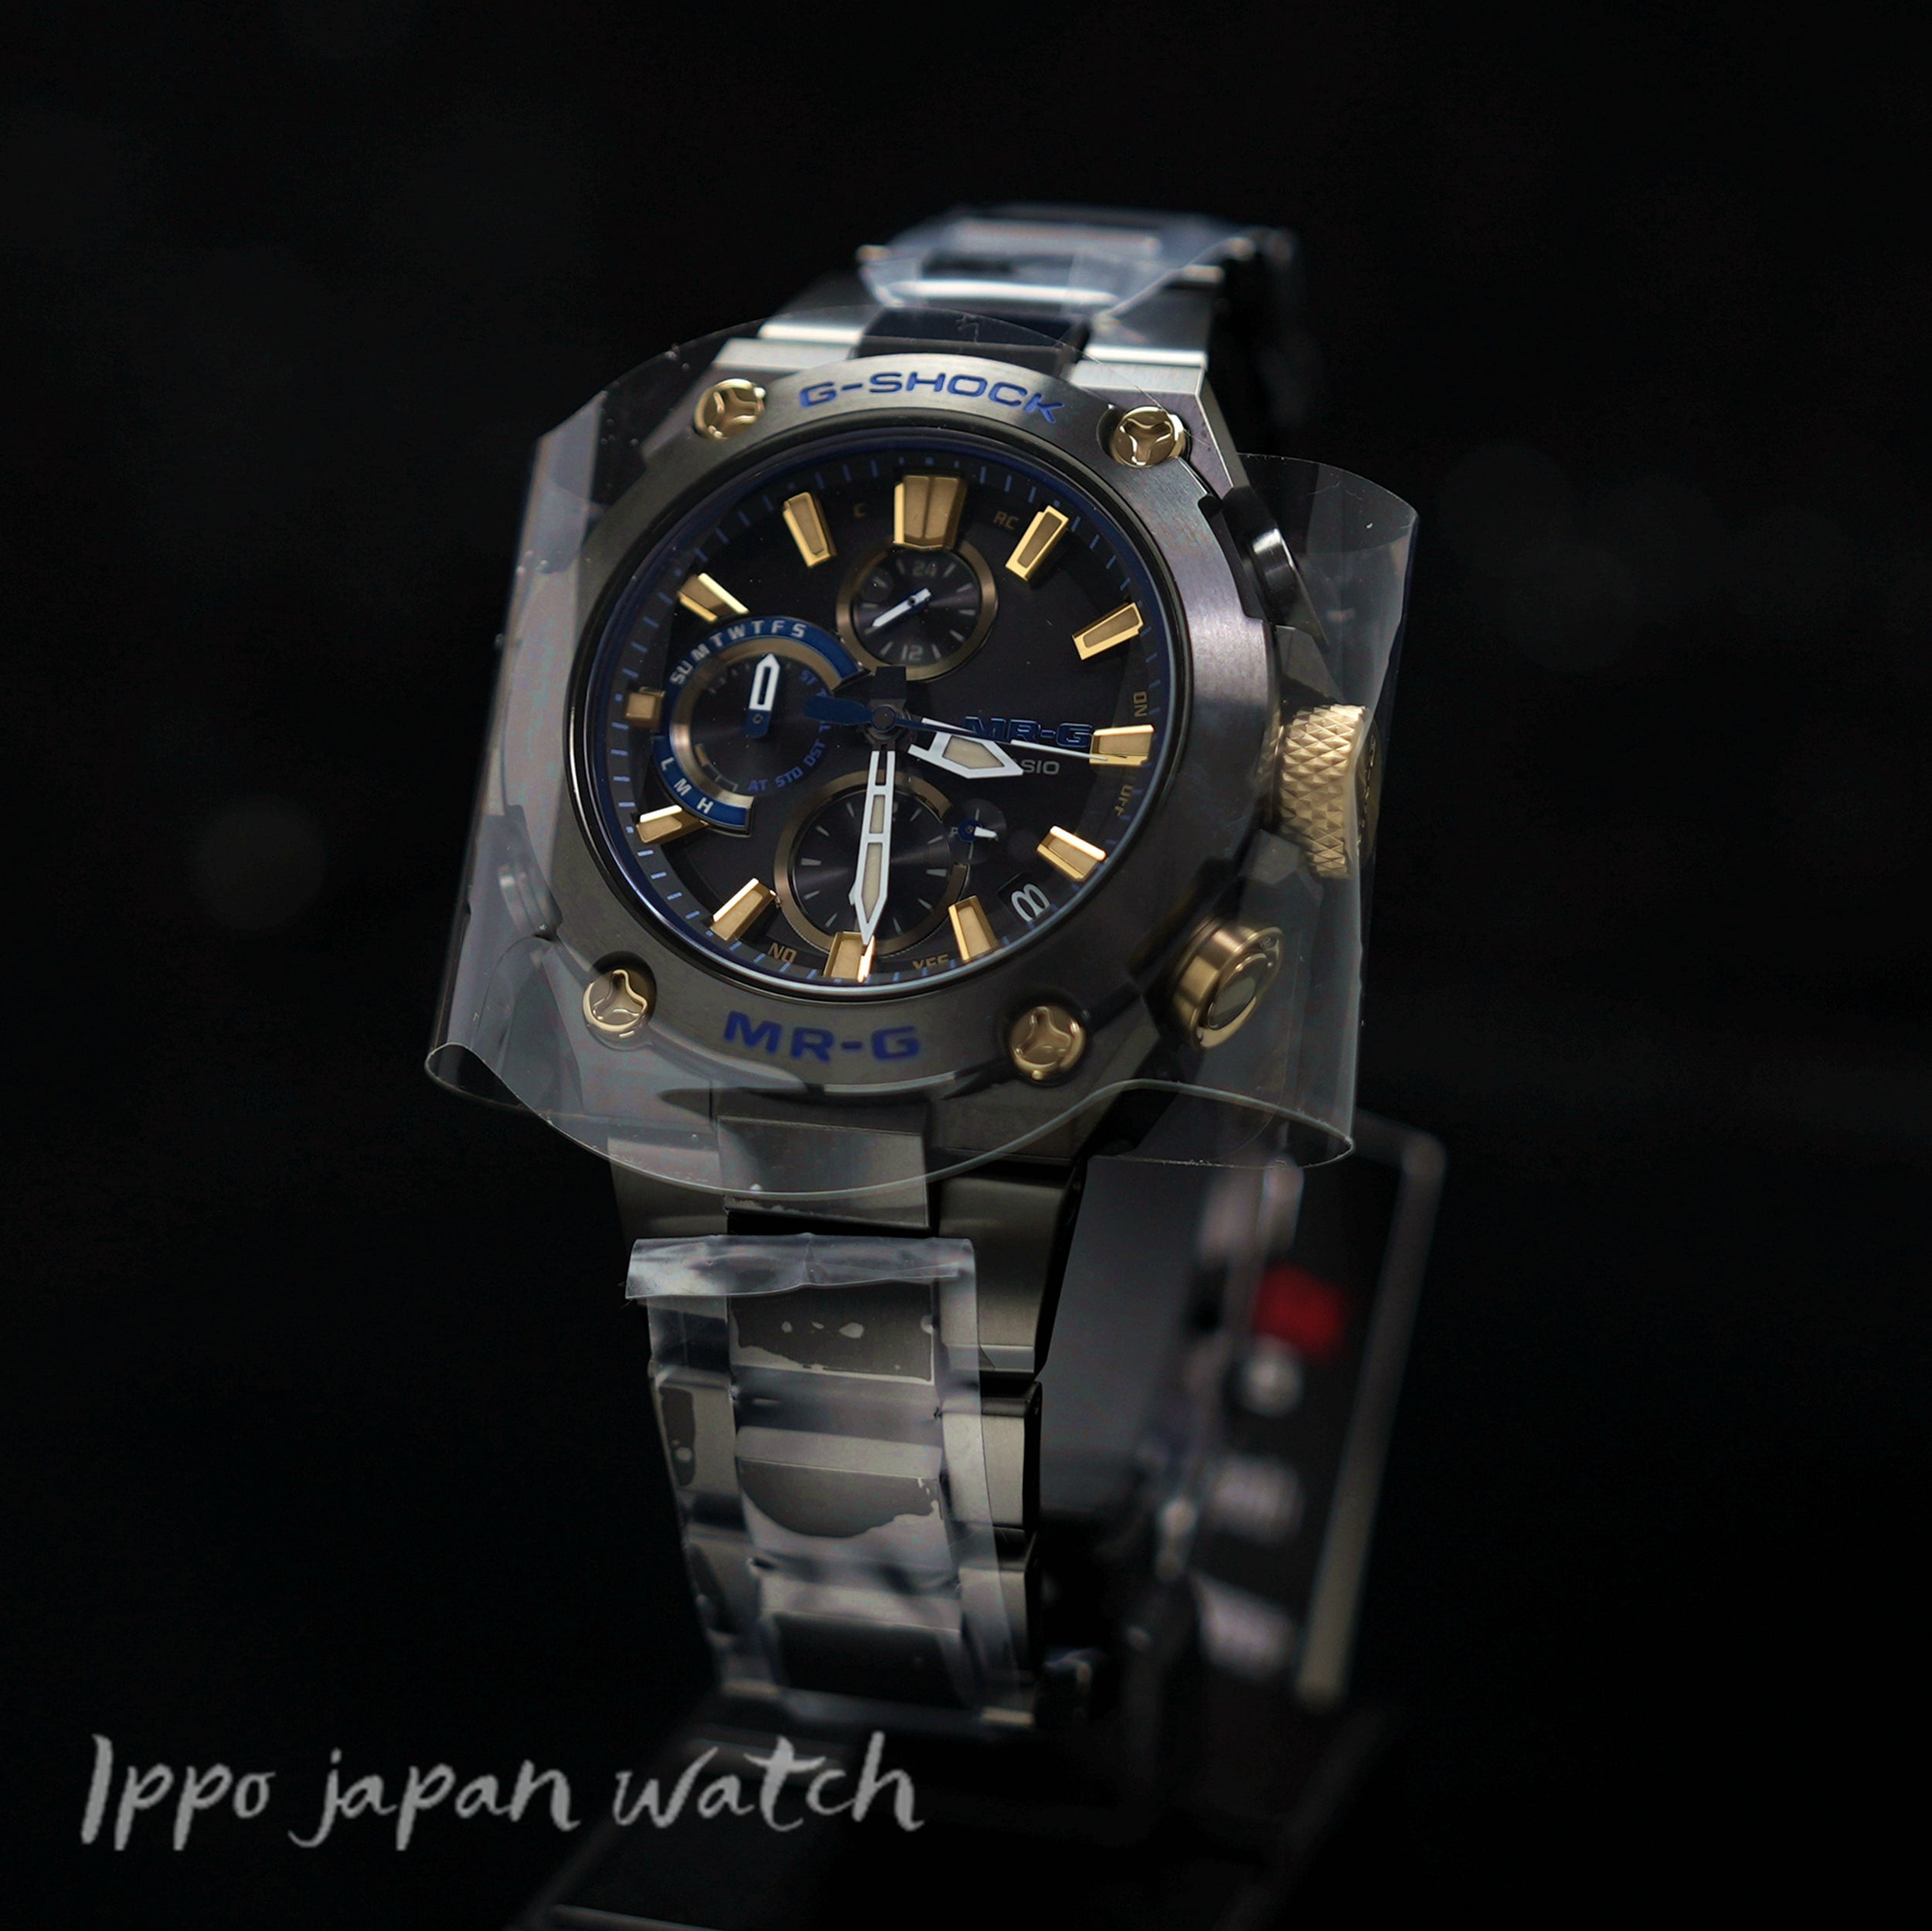 CASIO gshock MRG-B1000BA-1AJR MRG-B1000BA-1A solar titanium watch February 2021 released - IPPO JAPAN WATCH 